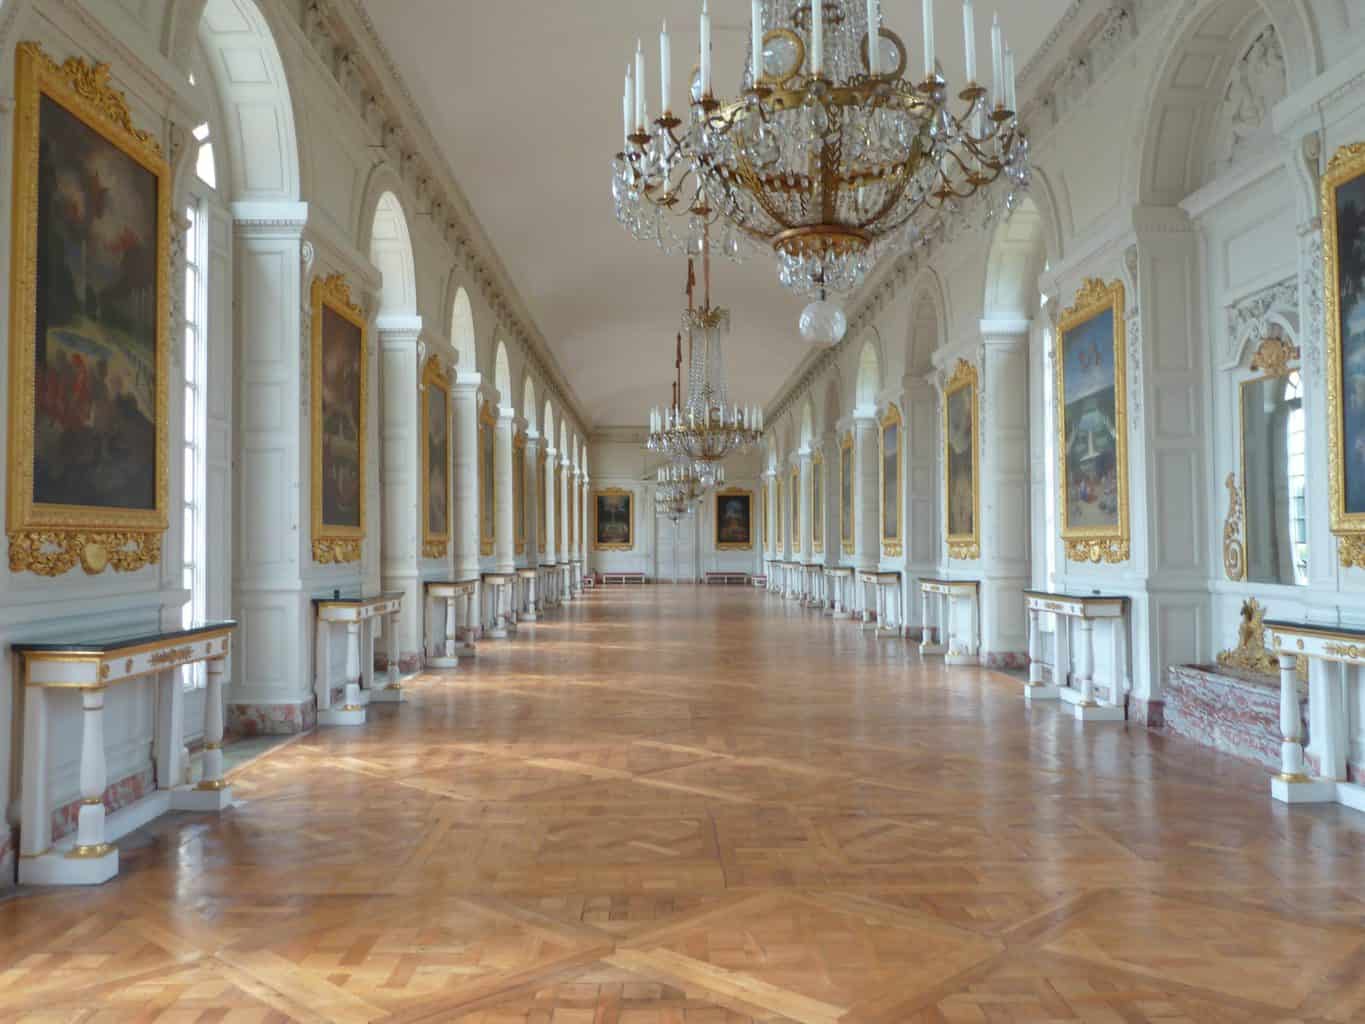 A corridor with shiny floor